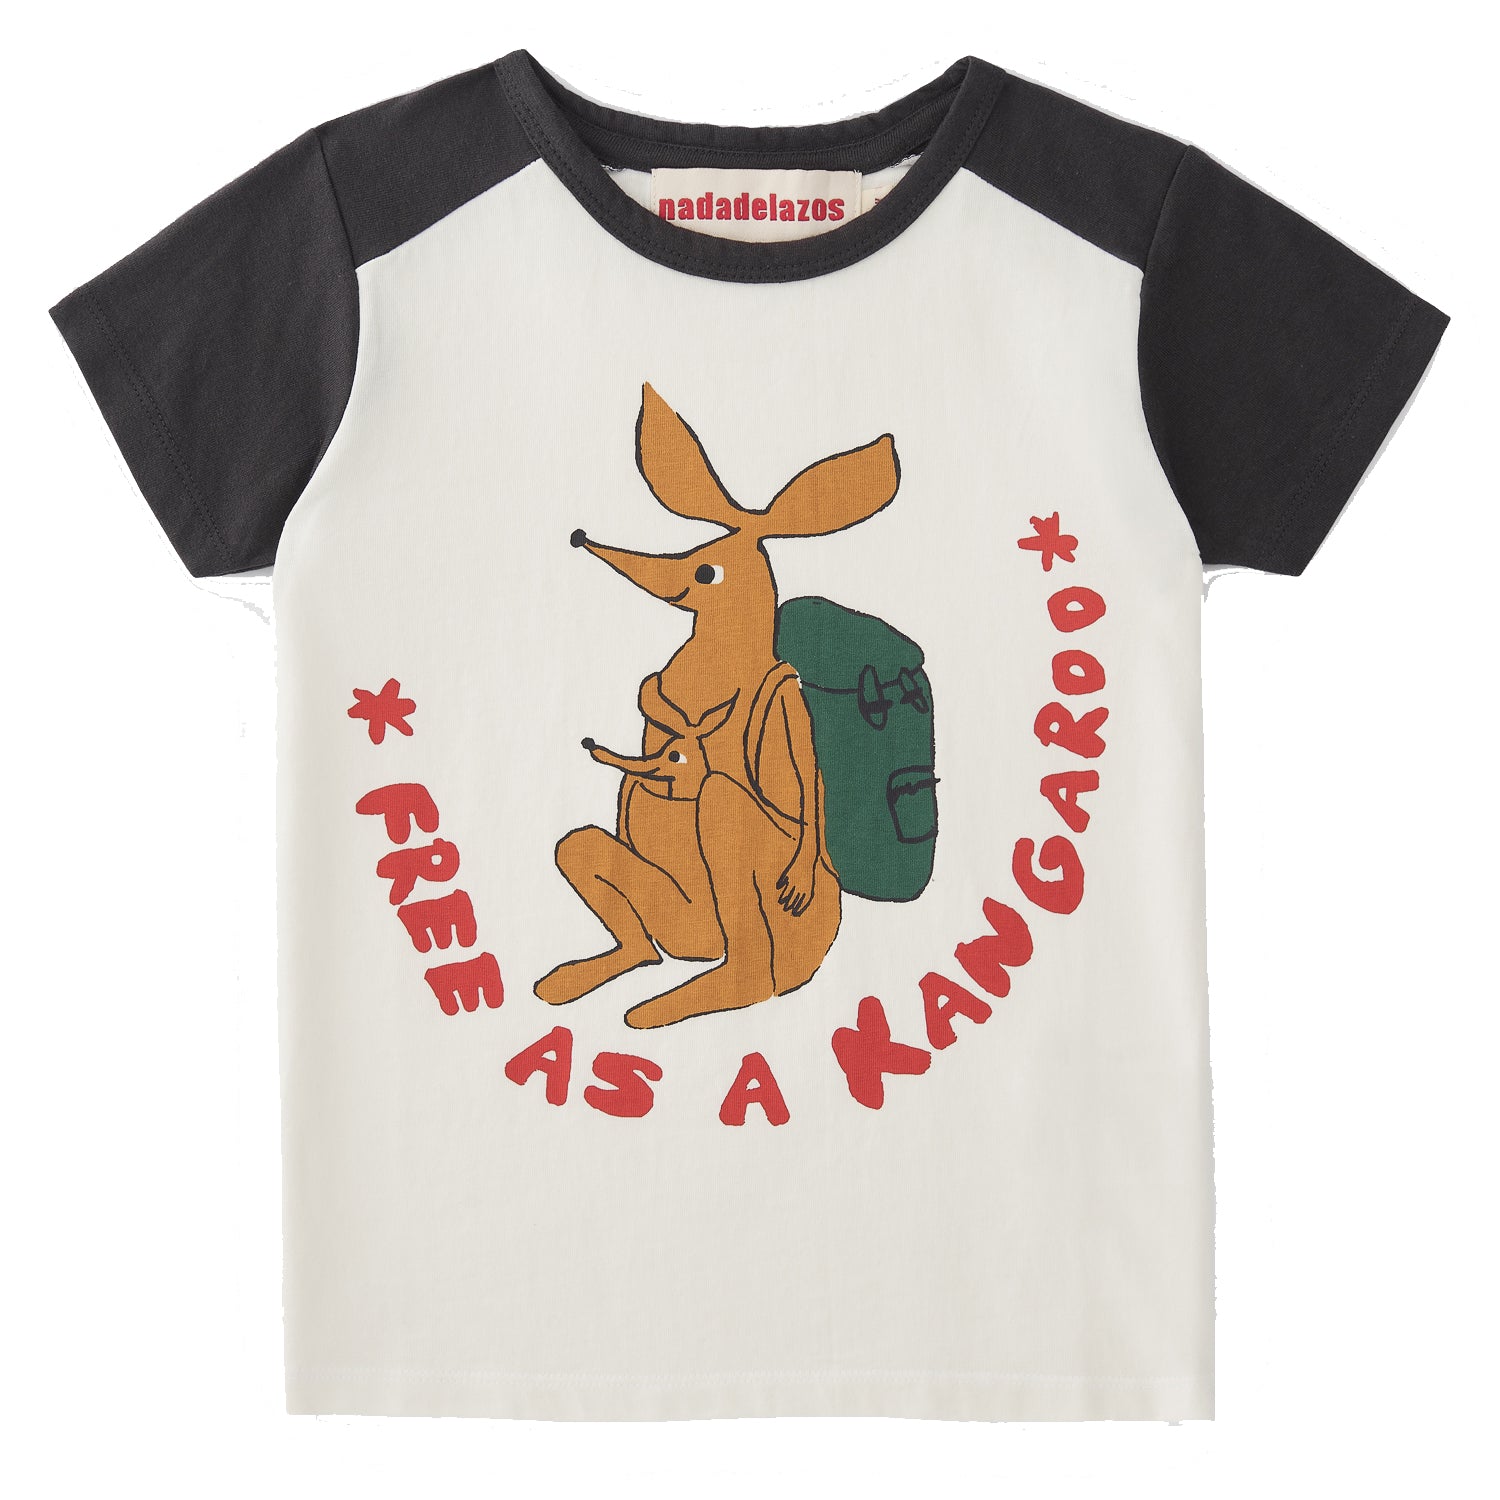 Nadadelazos Crib & as Kangaroo Kid Green The a T-Shirt Free –